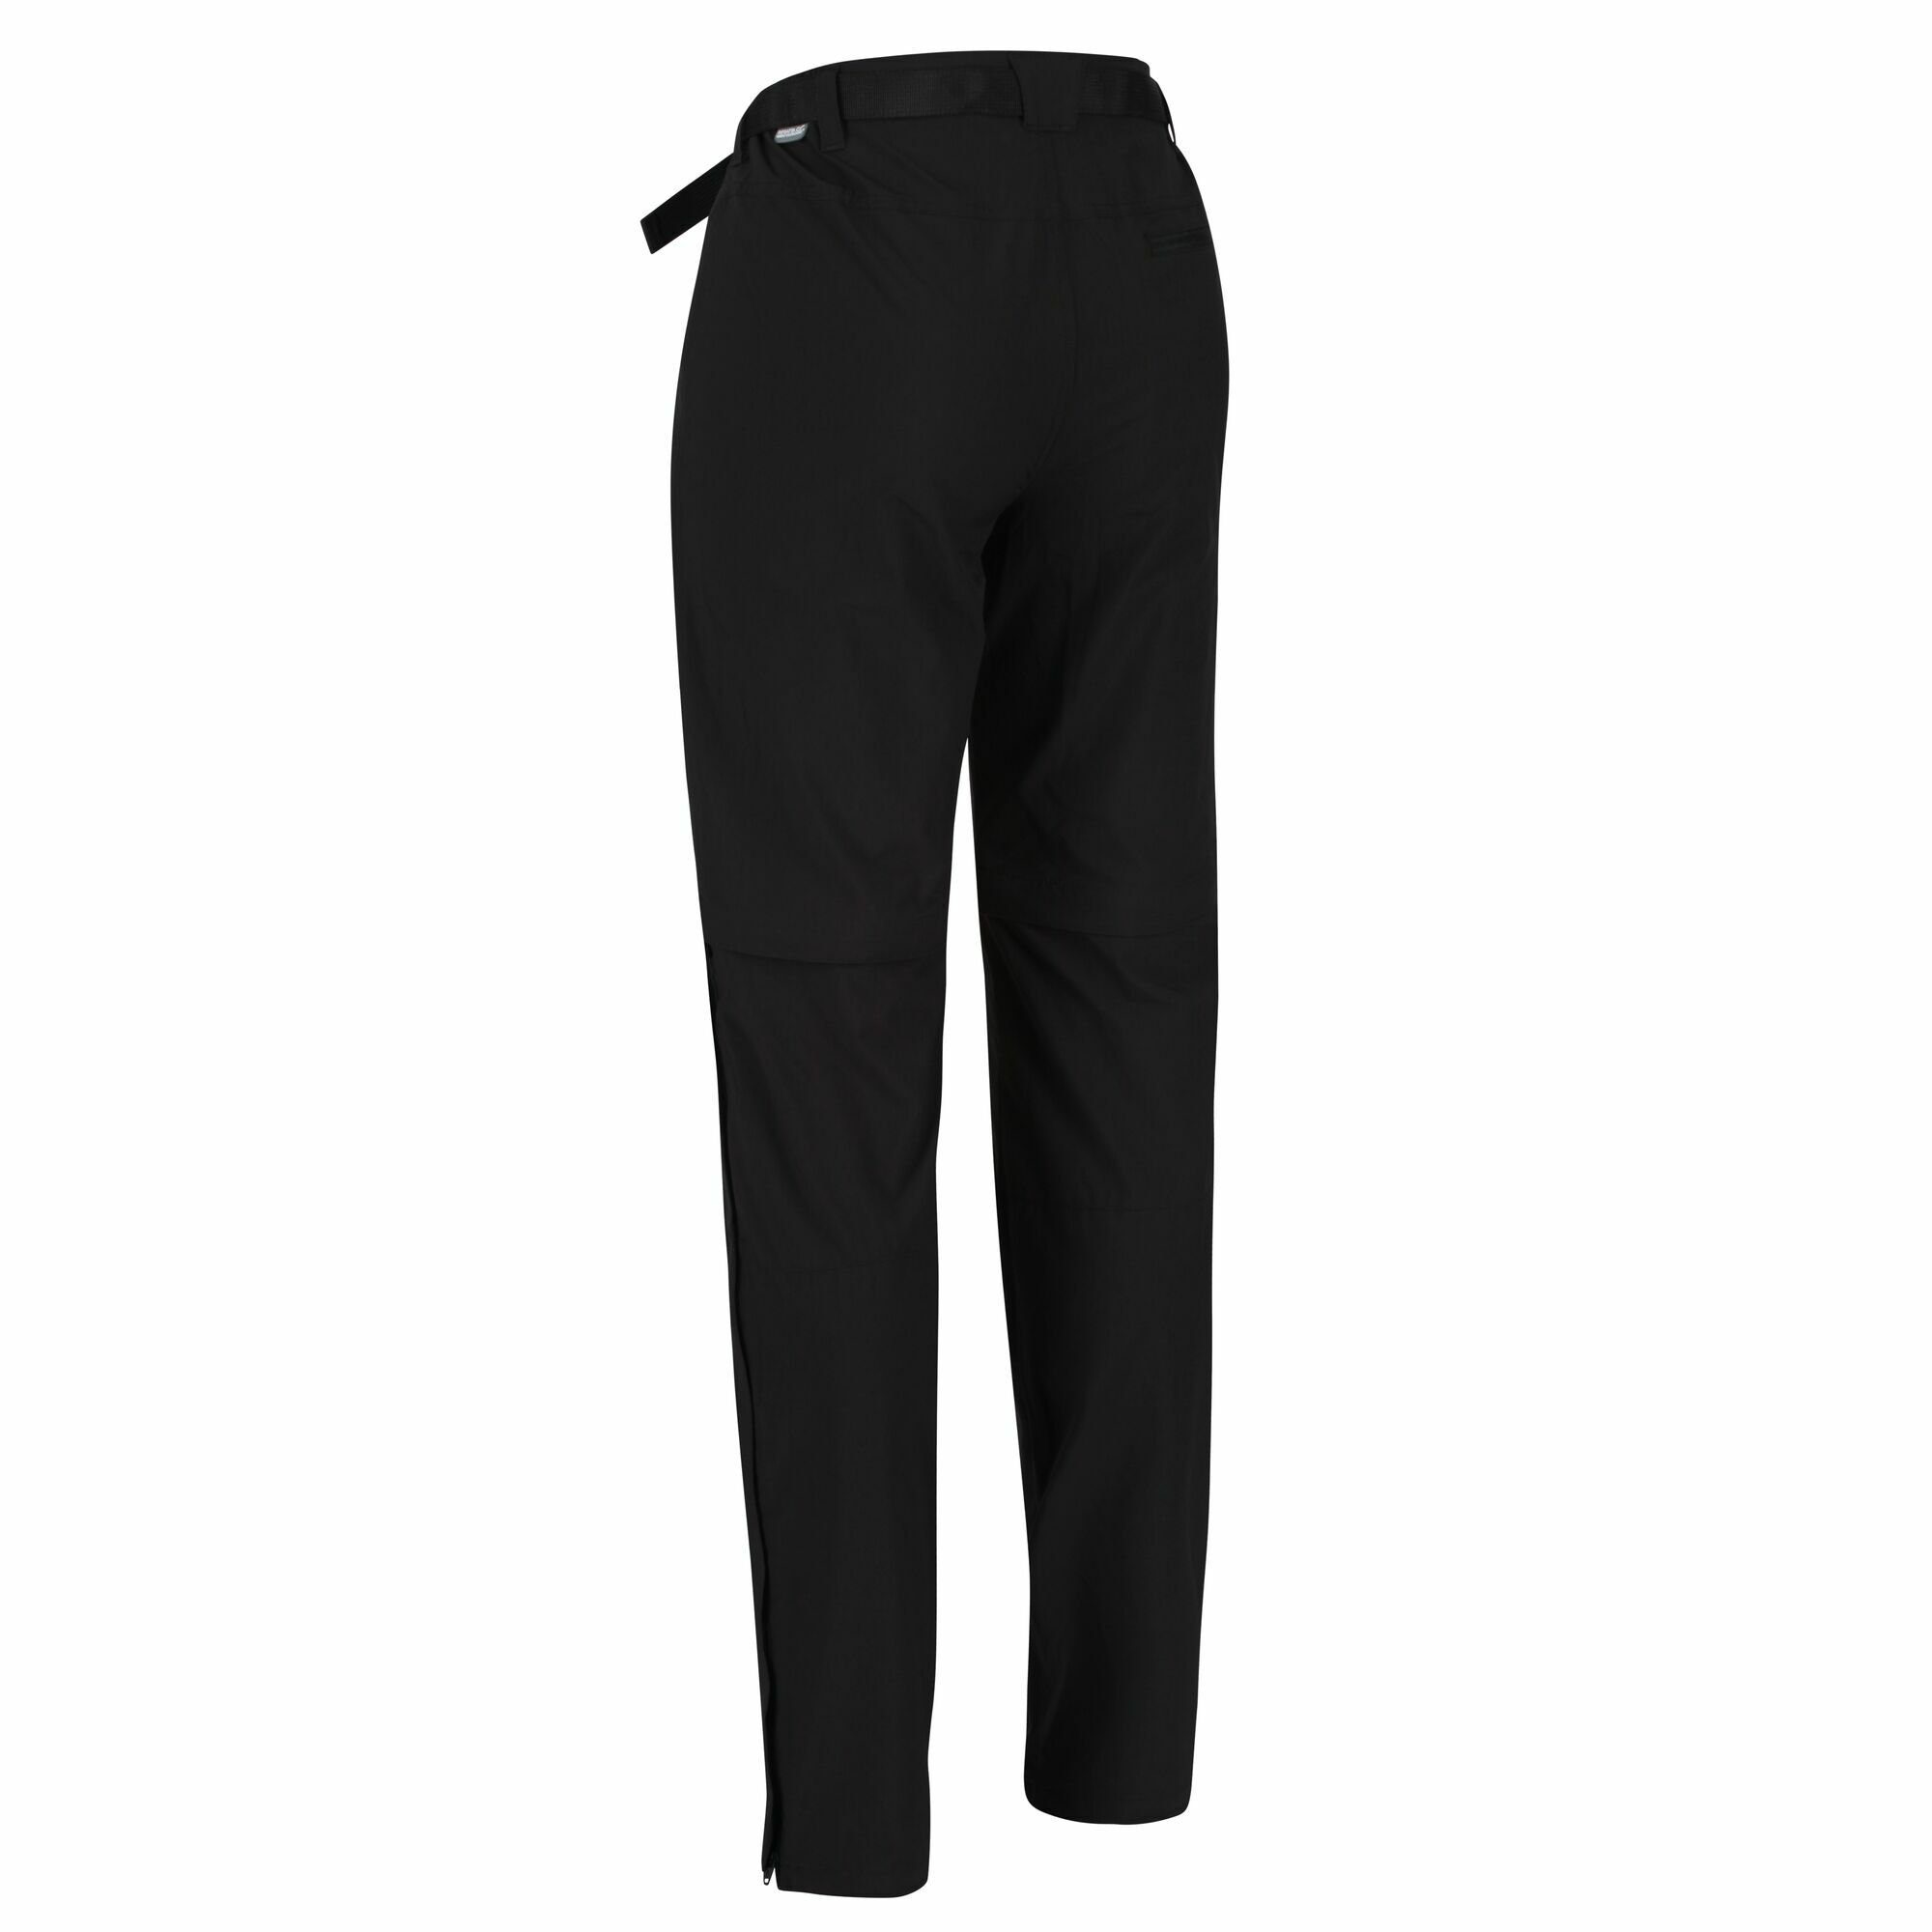 abnehmbaren Regatta Black Zip Hosenbeinen Xert mit für Outdoorhose Off Damen,